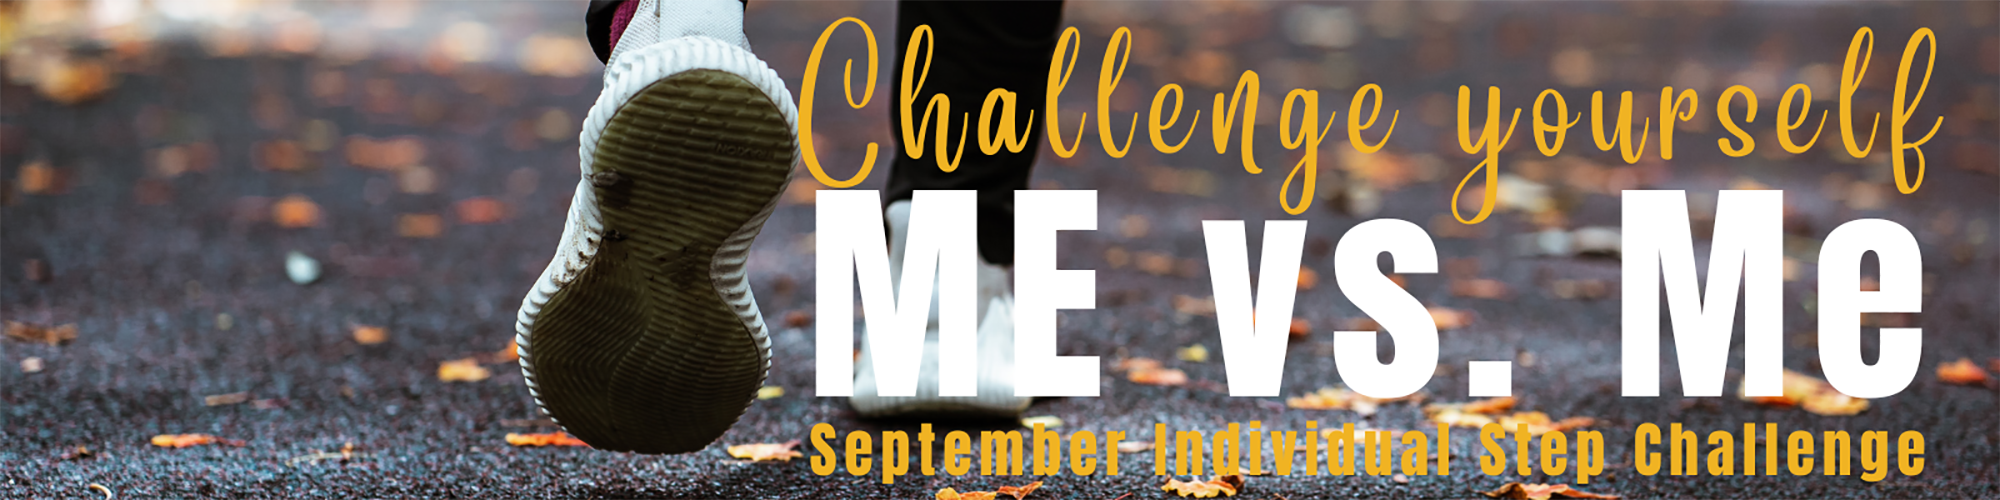 Challenge yourself Me vs. Me September Individual Step Challenge